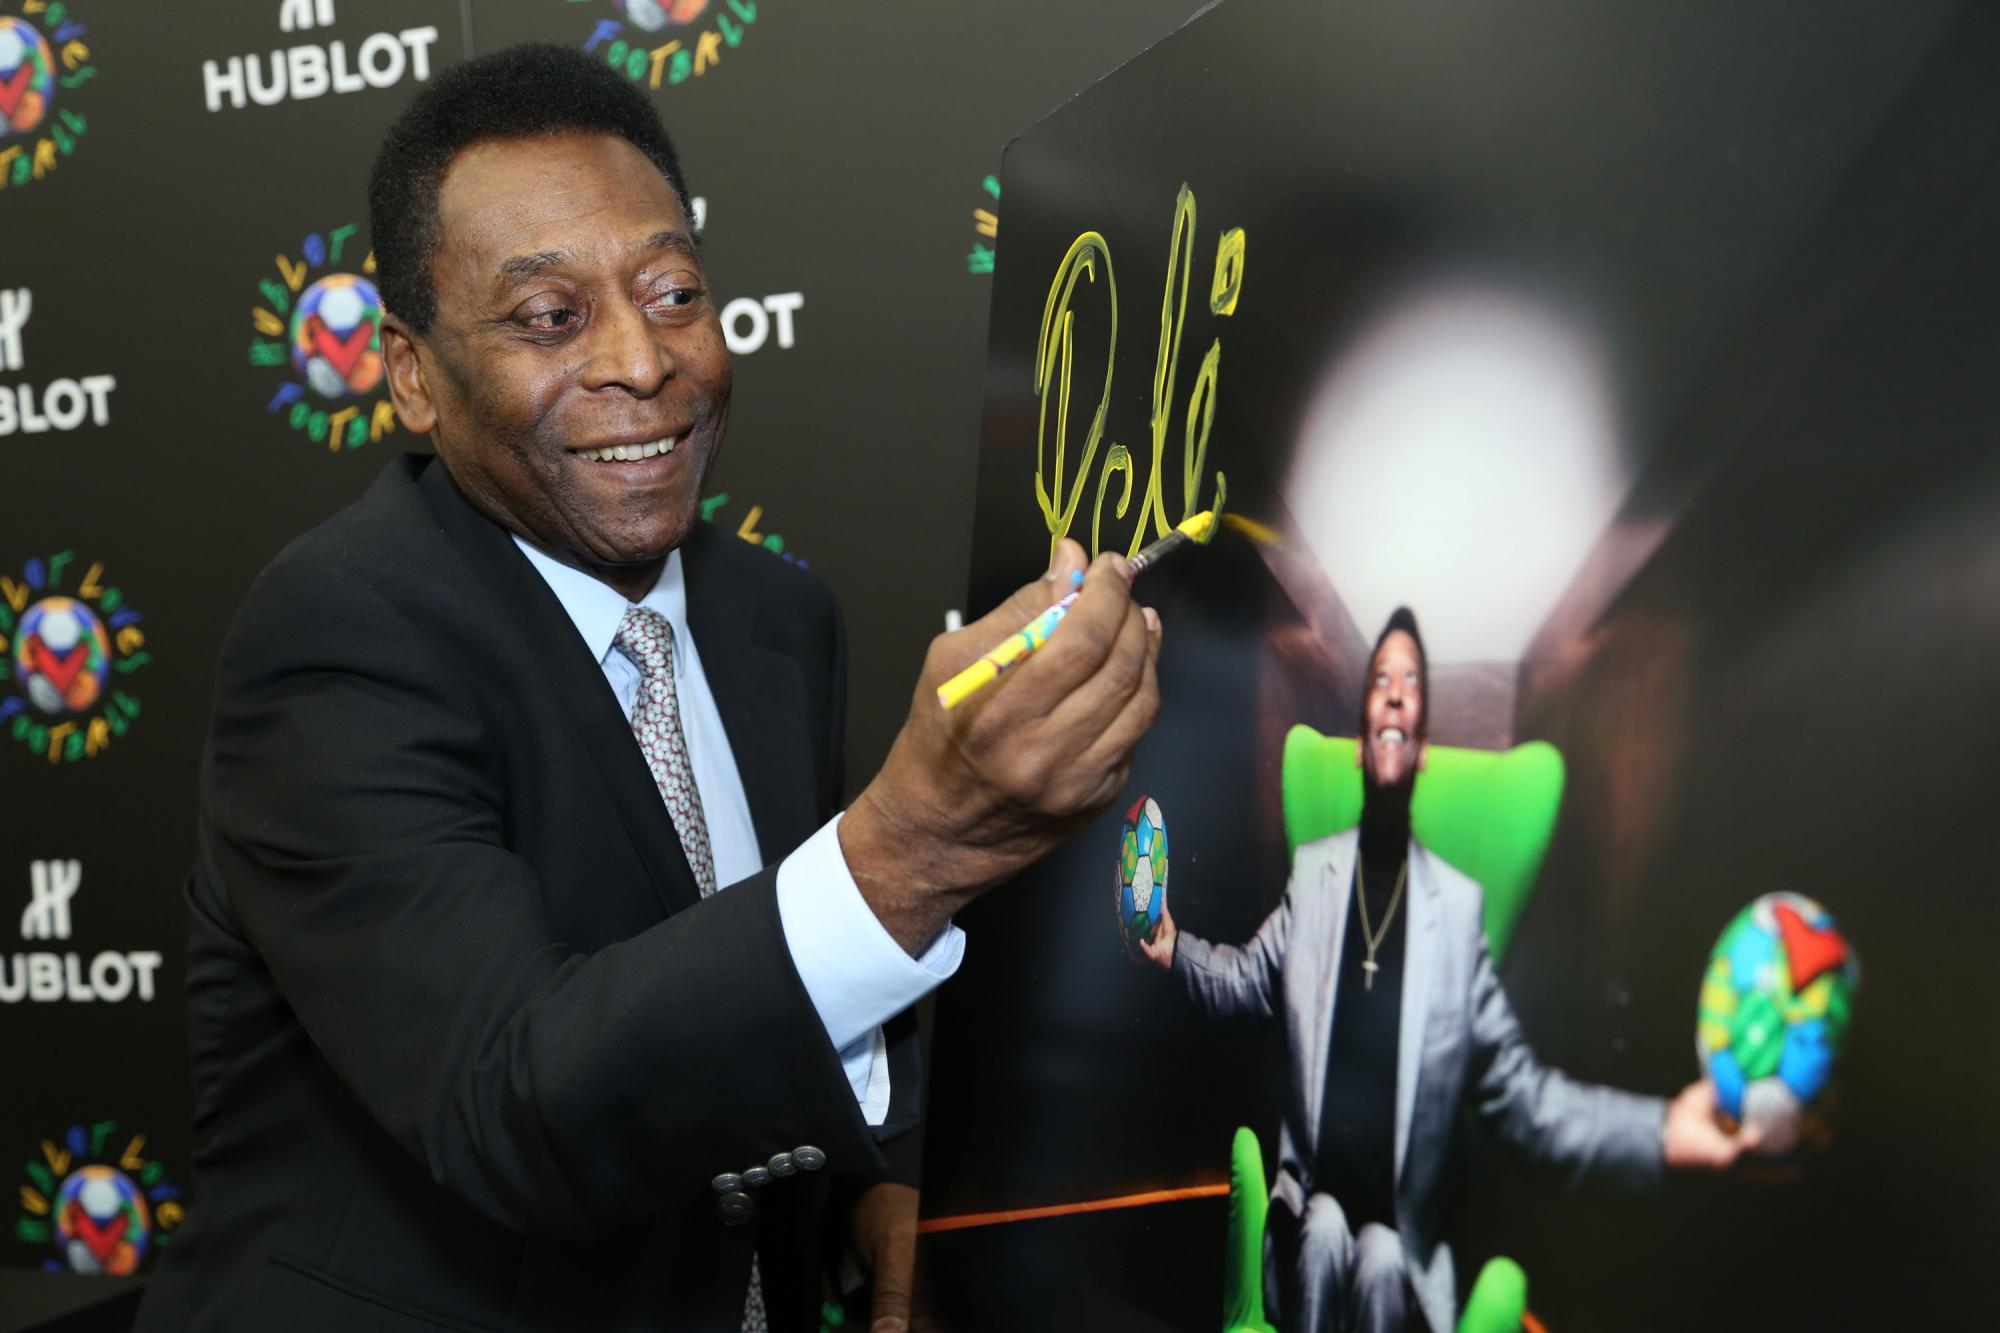 Hublot & Pelé Bring Hublot Loves Football Global Campaign to